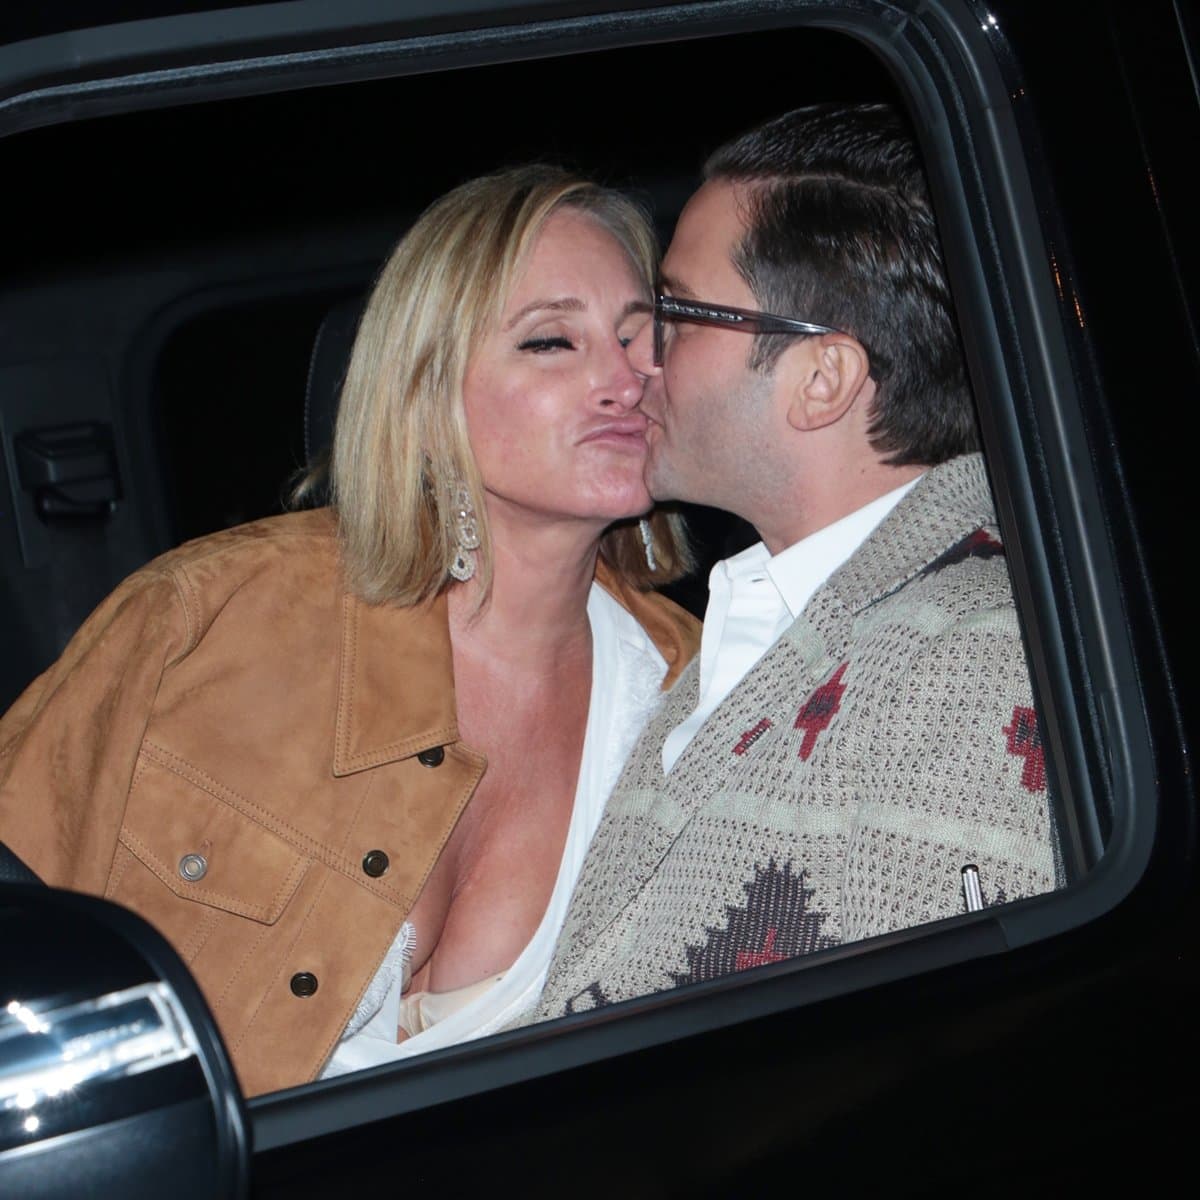 Luxury real estate agent Josh Flagg kisses Sonja Morgan outside Craig's restaurant